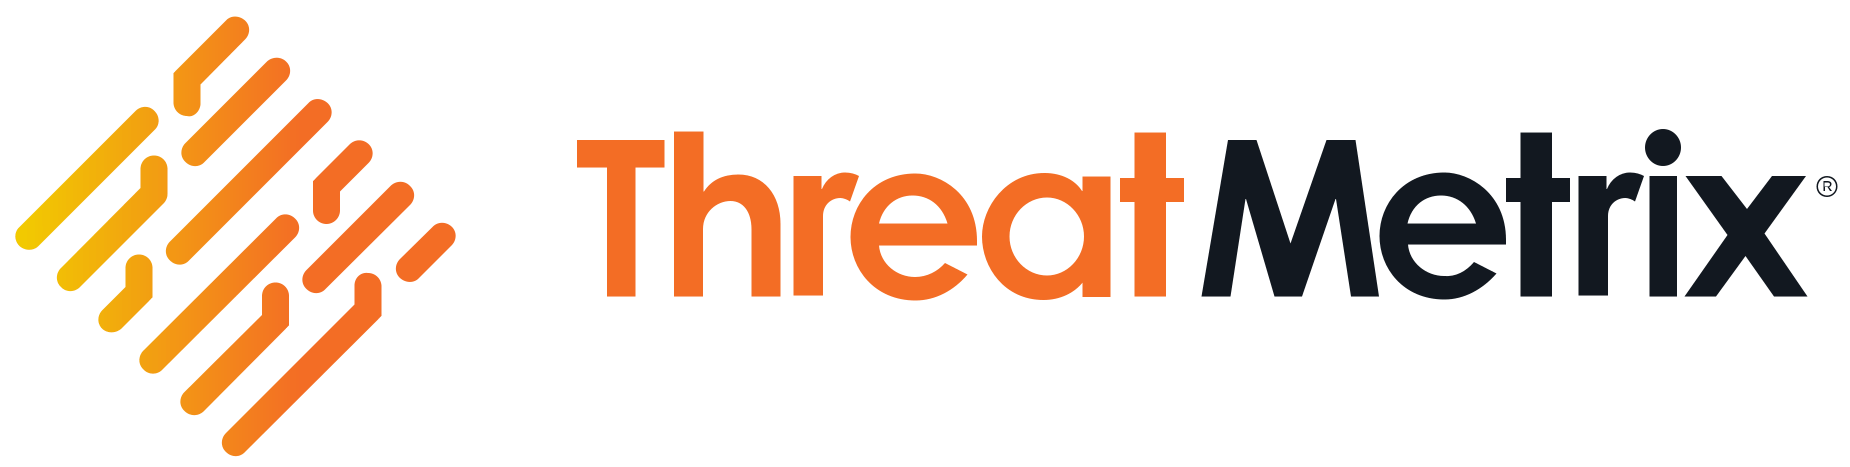 Threatmetrix logo